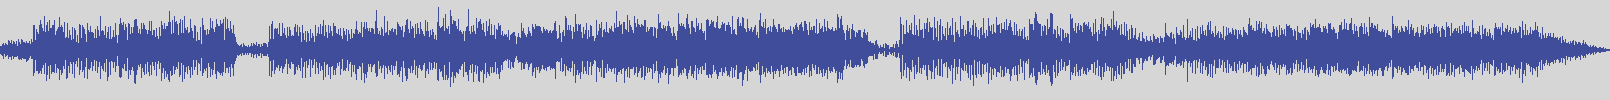 digiphonic_records [DPR013] Little Tony - Cuore Ballerino [Original Mix] audio wave form